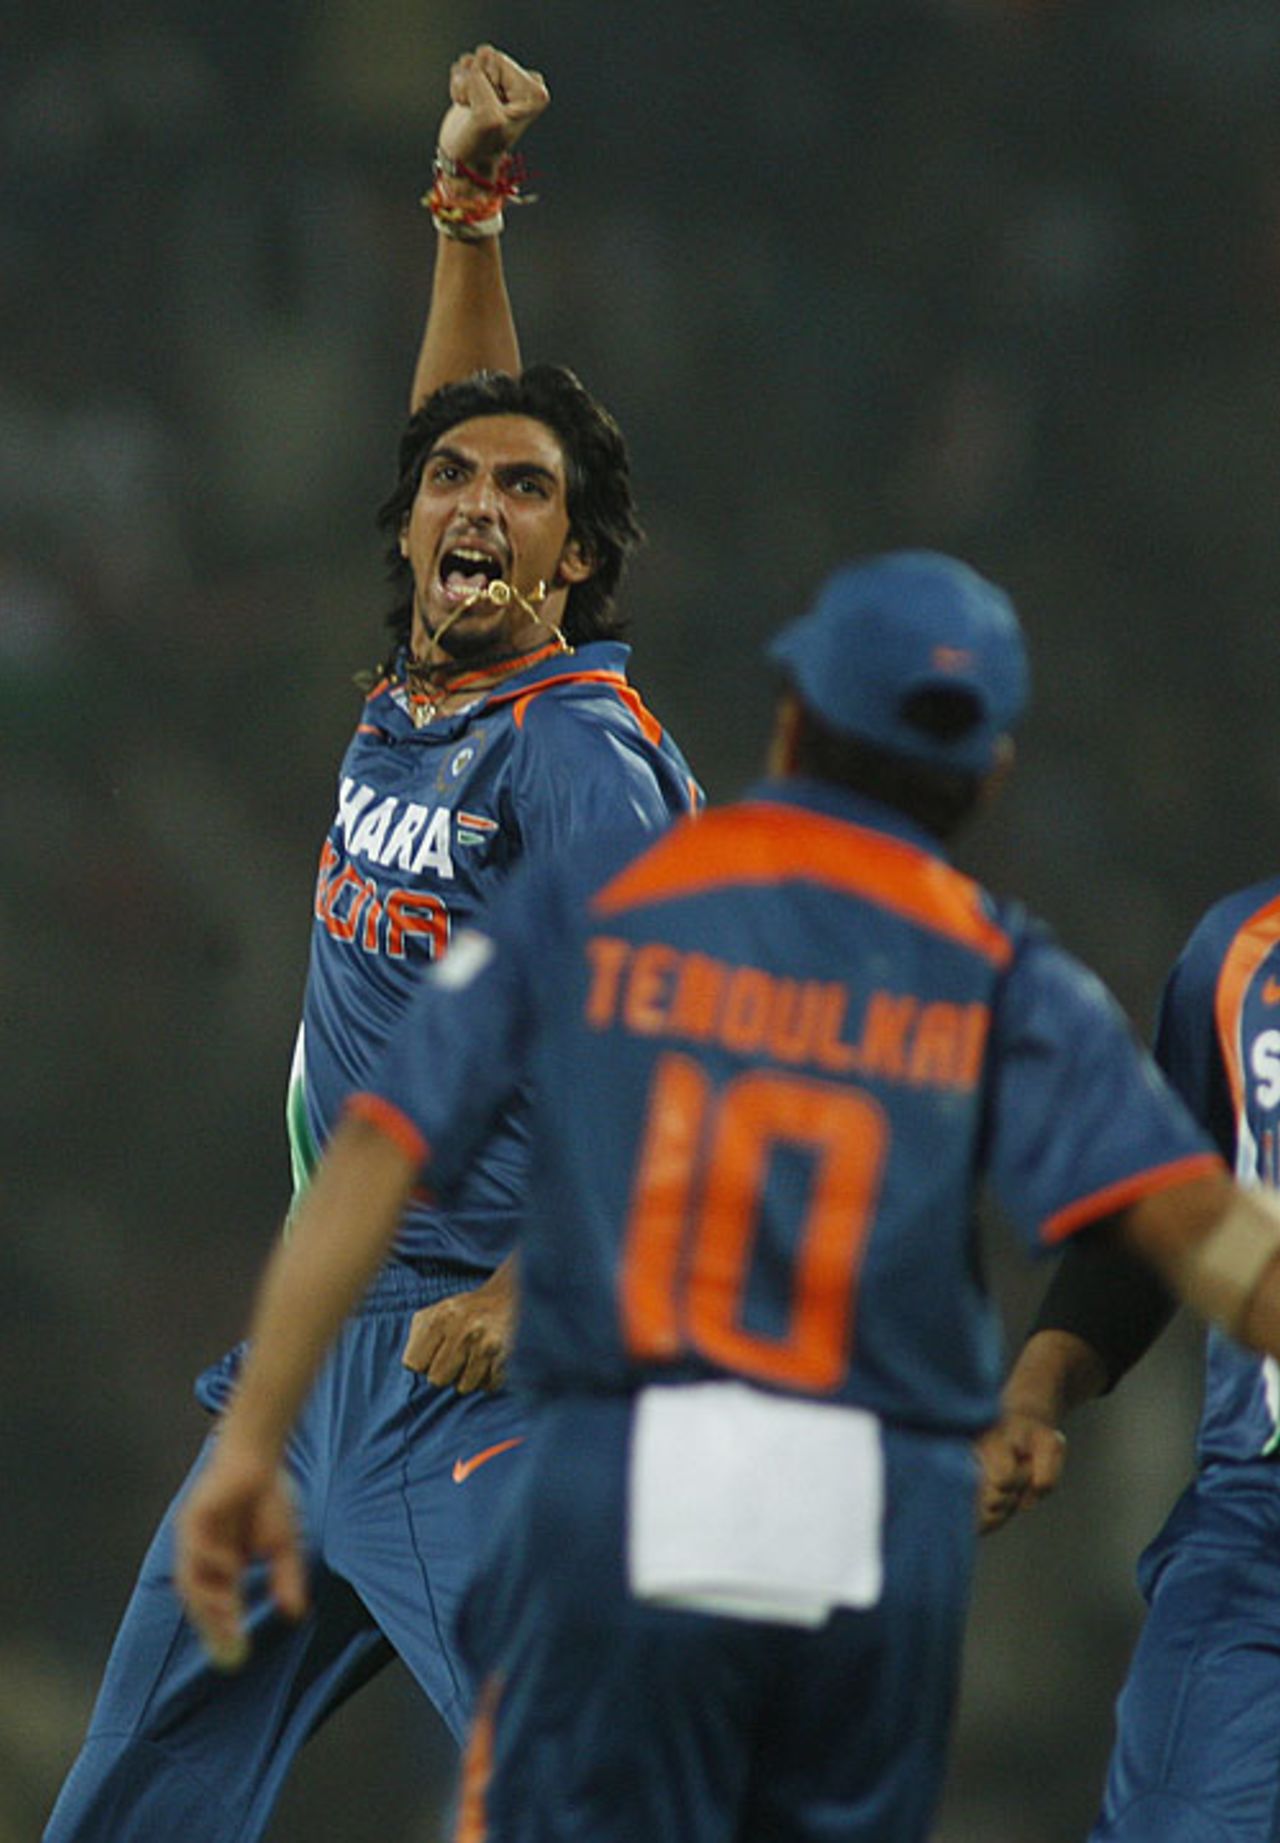 Ishant Sharma is euphoric after dismissing Shane Watson, India v Australia, 2nd ODI, Nagpur, October 28, 2009